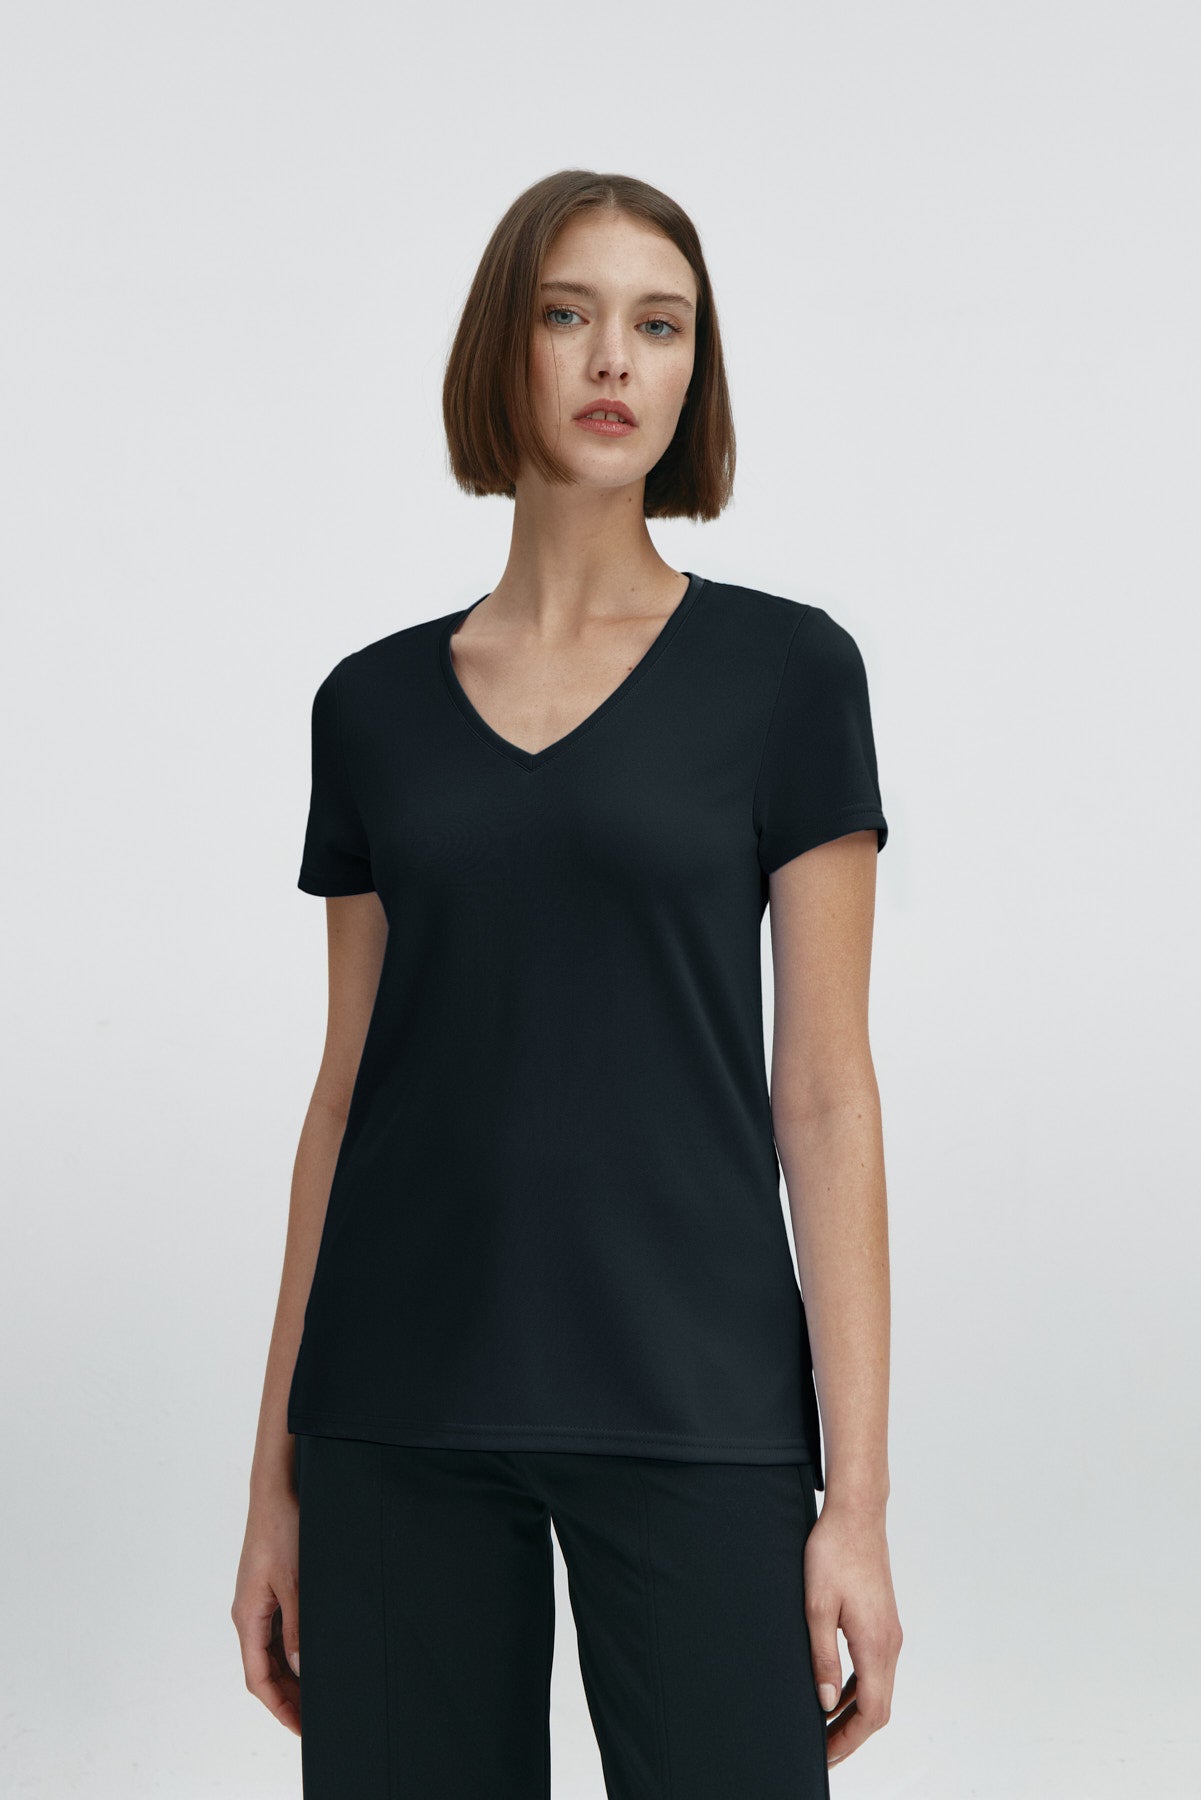 Camiseta para mujer de manga corta con escote pico color negro, básico. Foto frente